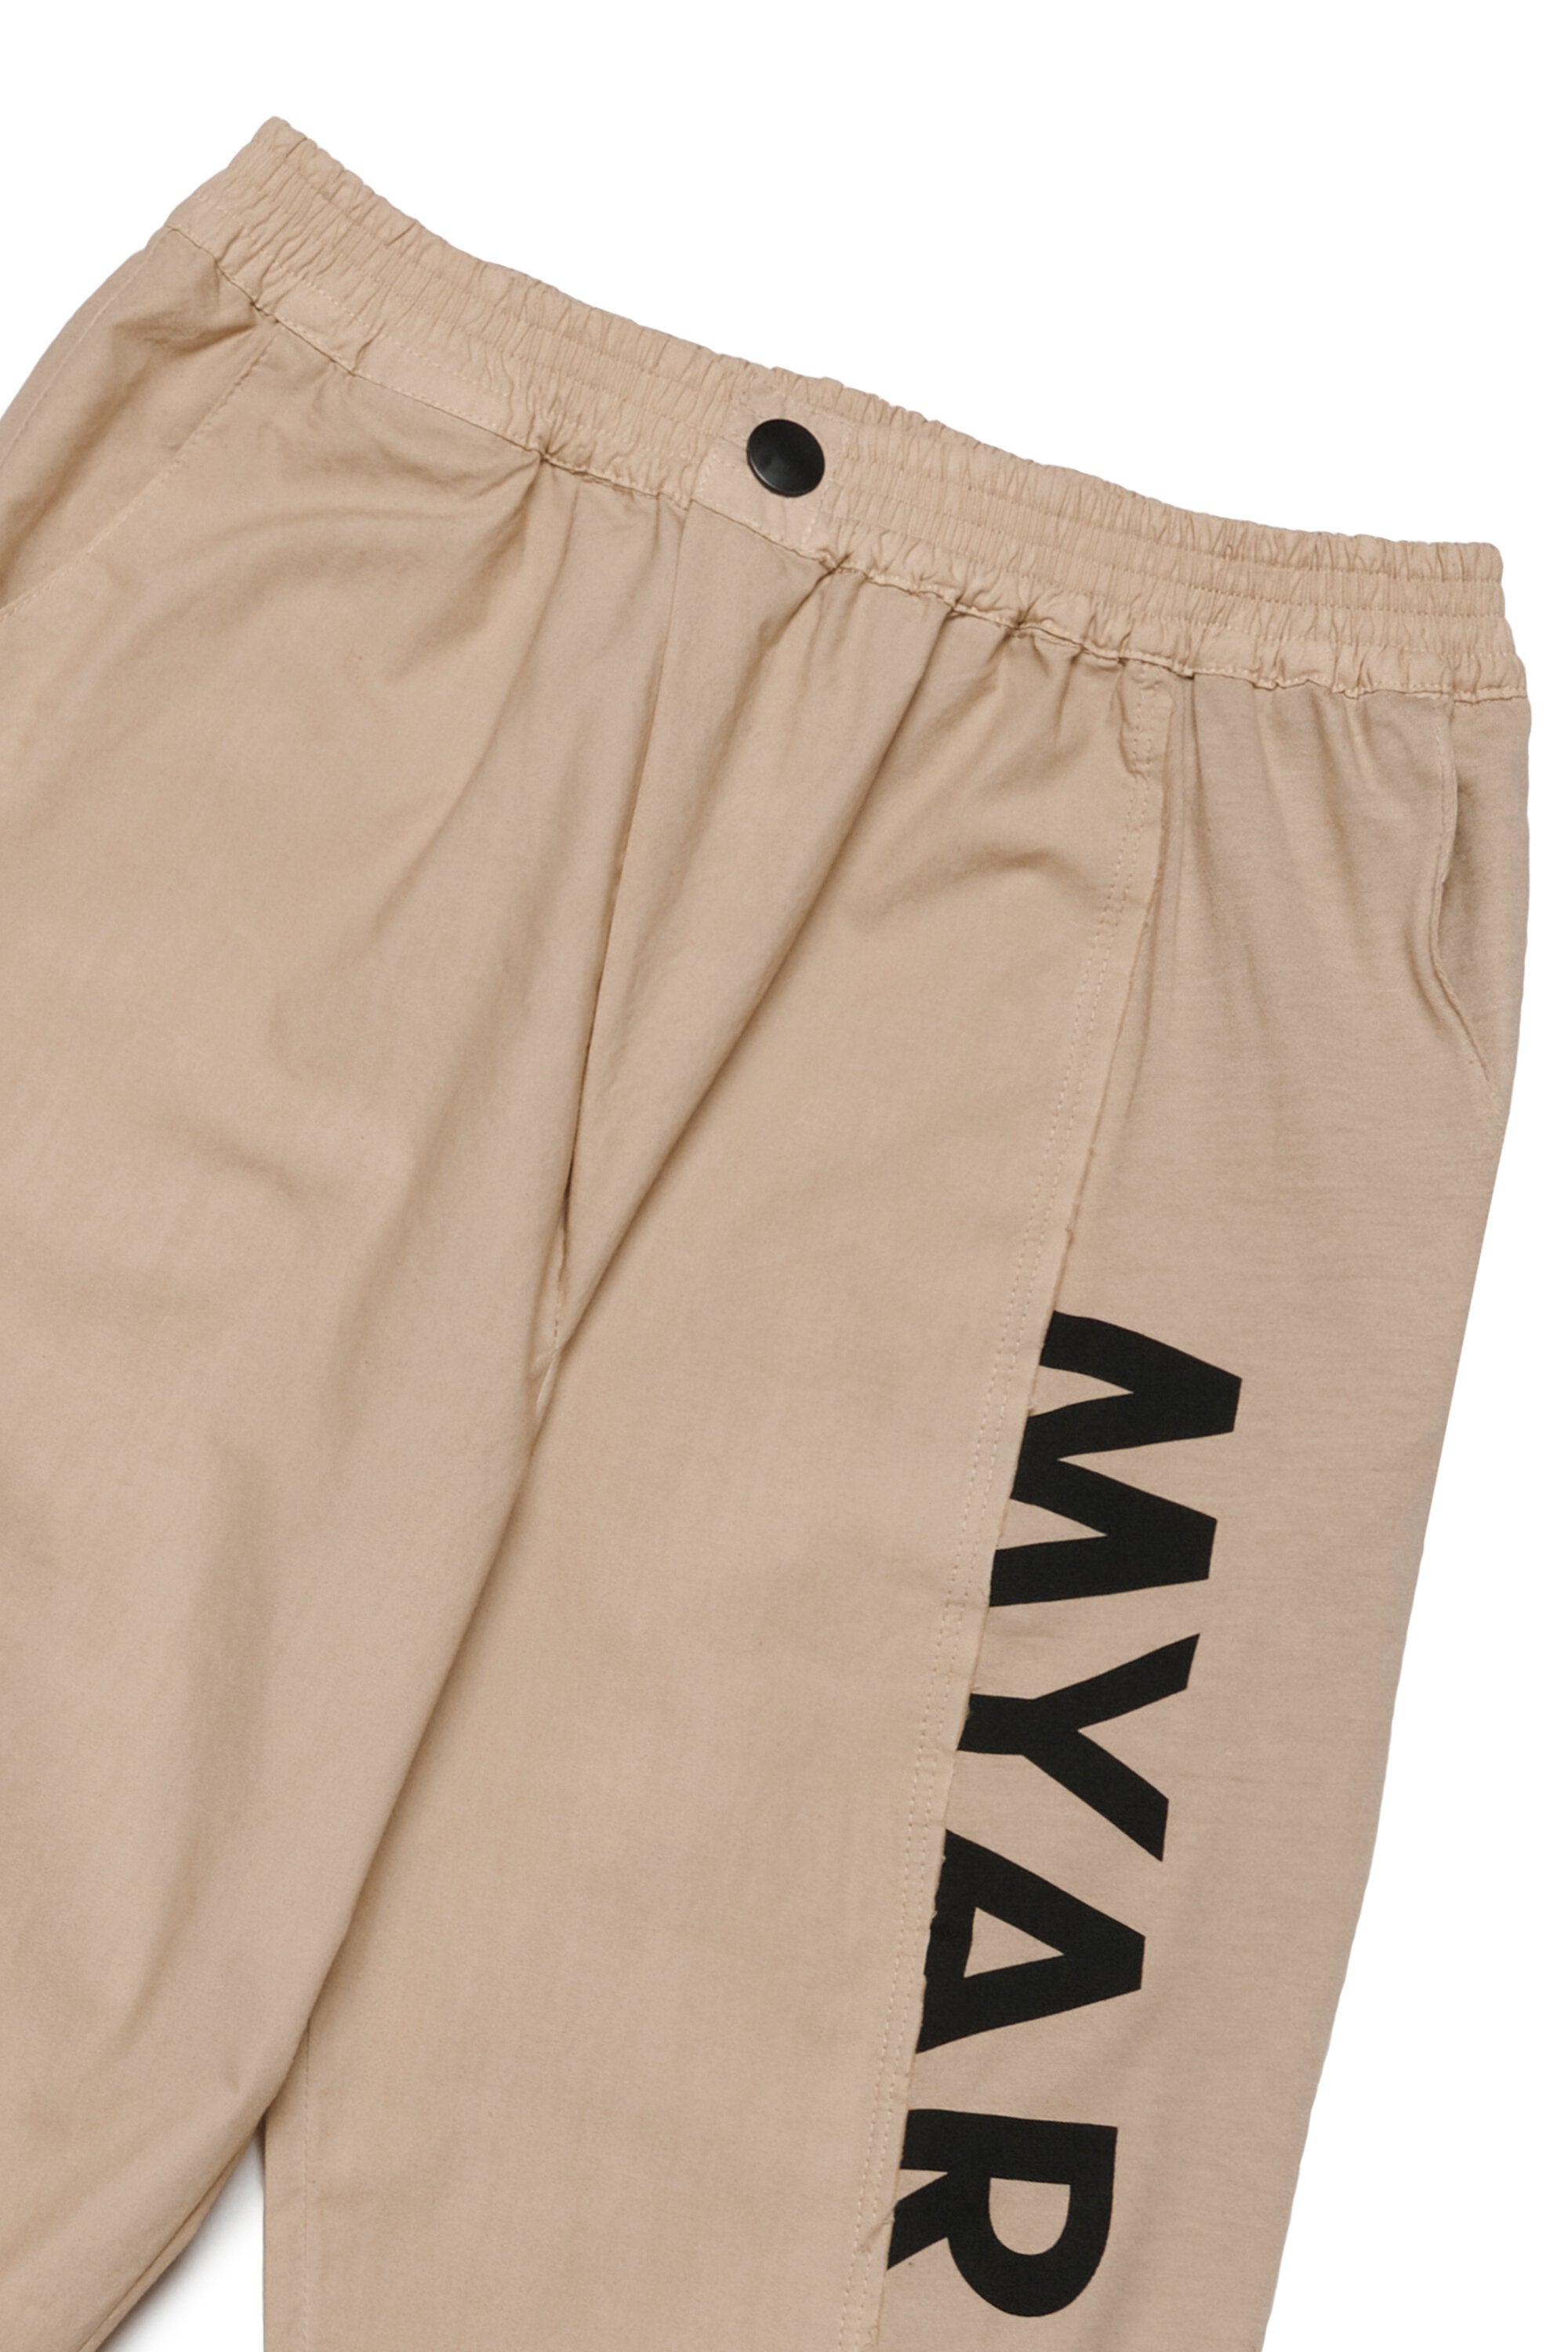 Pantalone in tessuto deadstock con logo MYAR